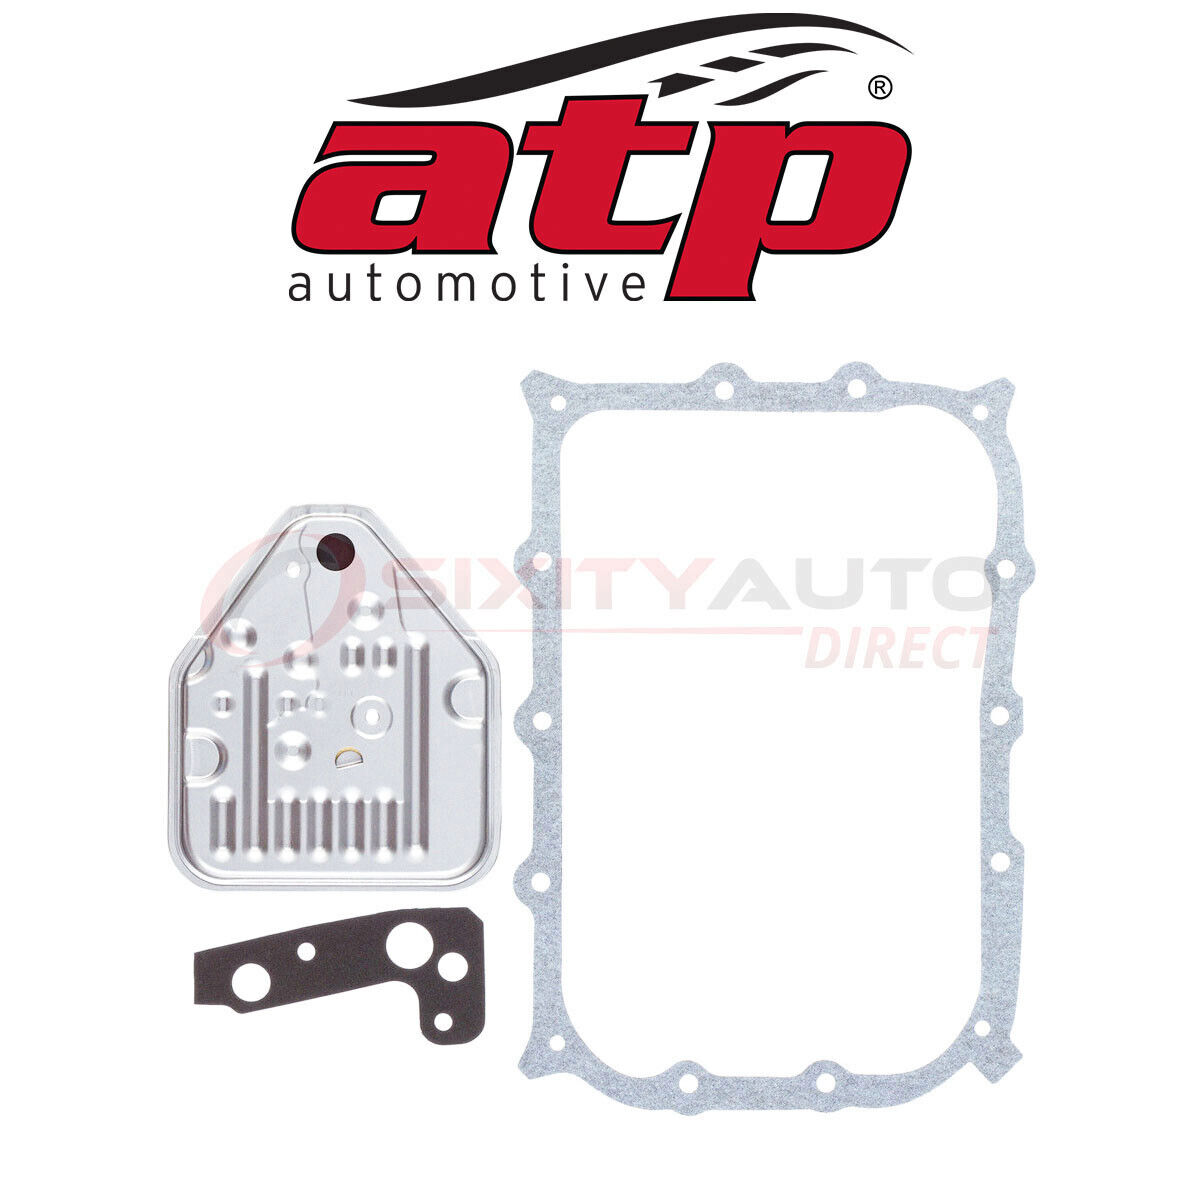 ATP Automotive B-71 Auto Transmission Filter Kit for Automatic Trans Service rb